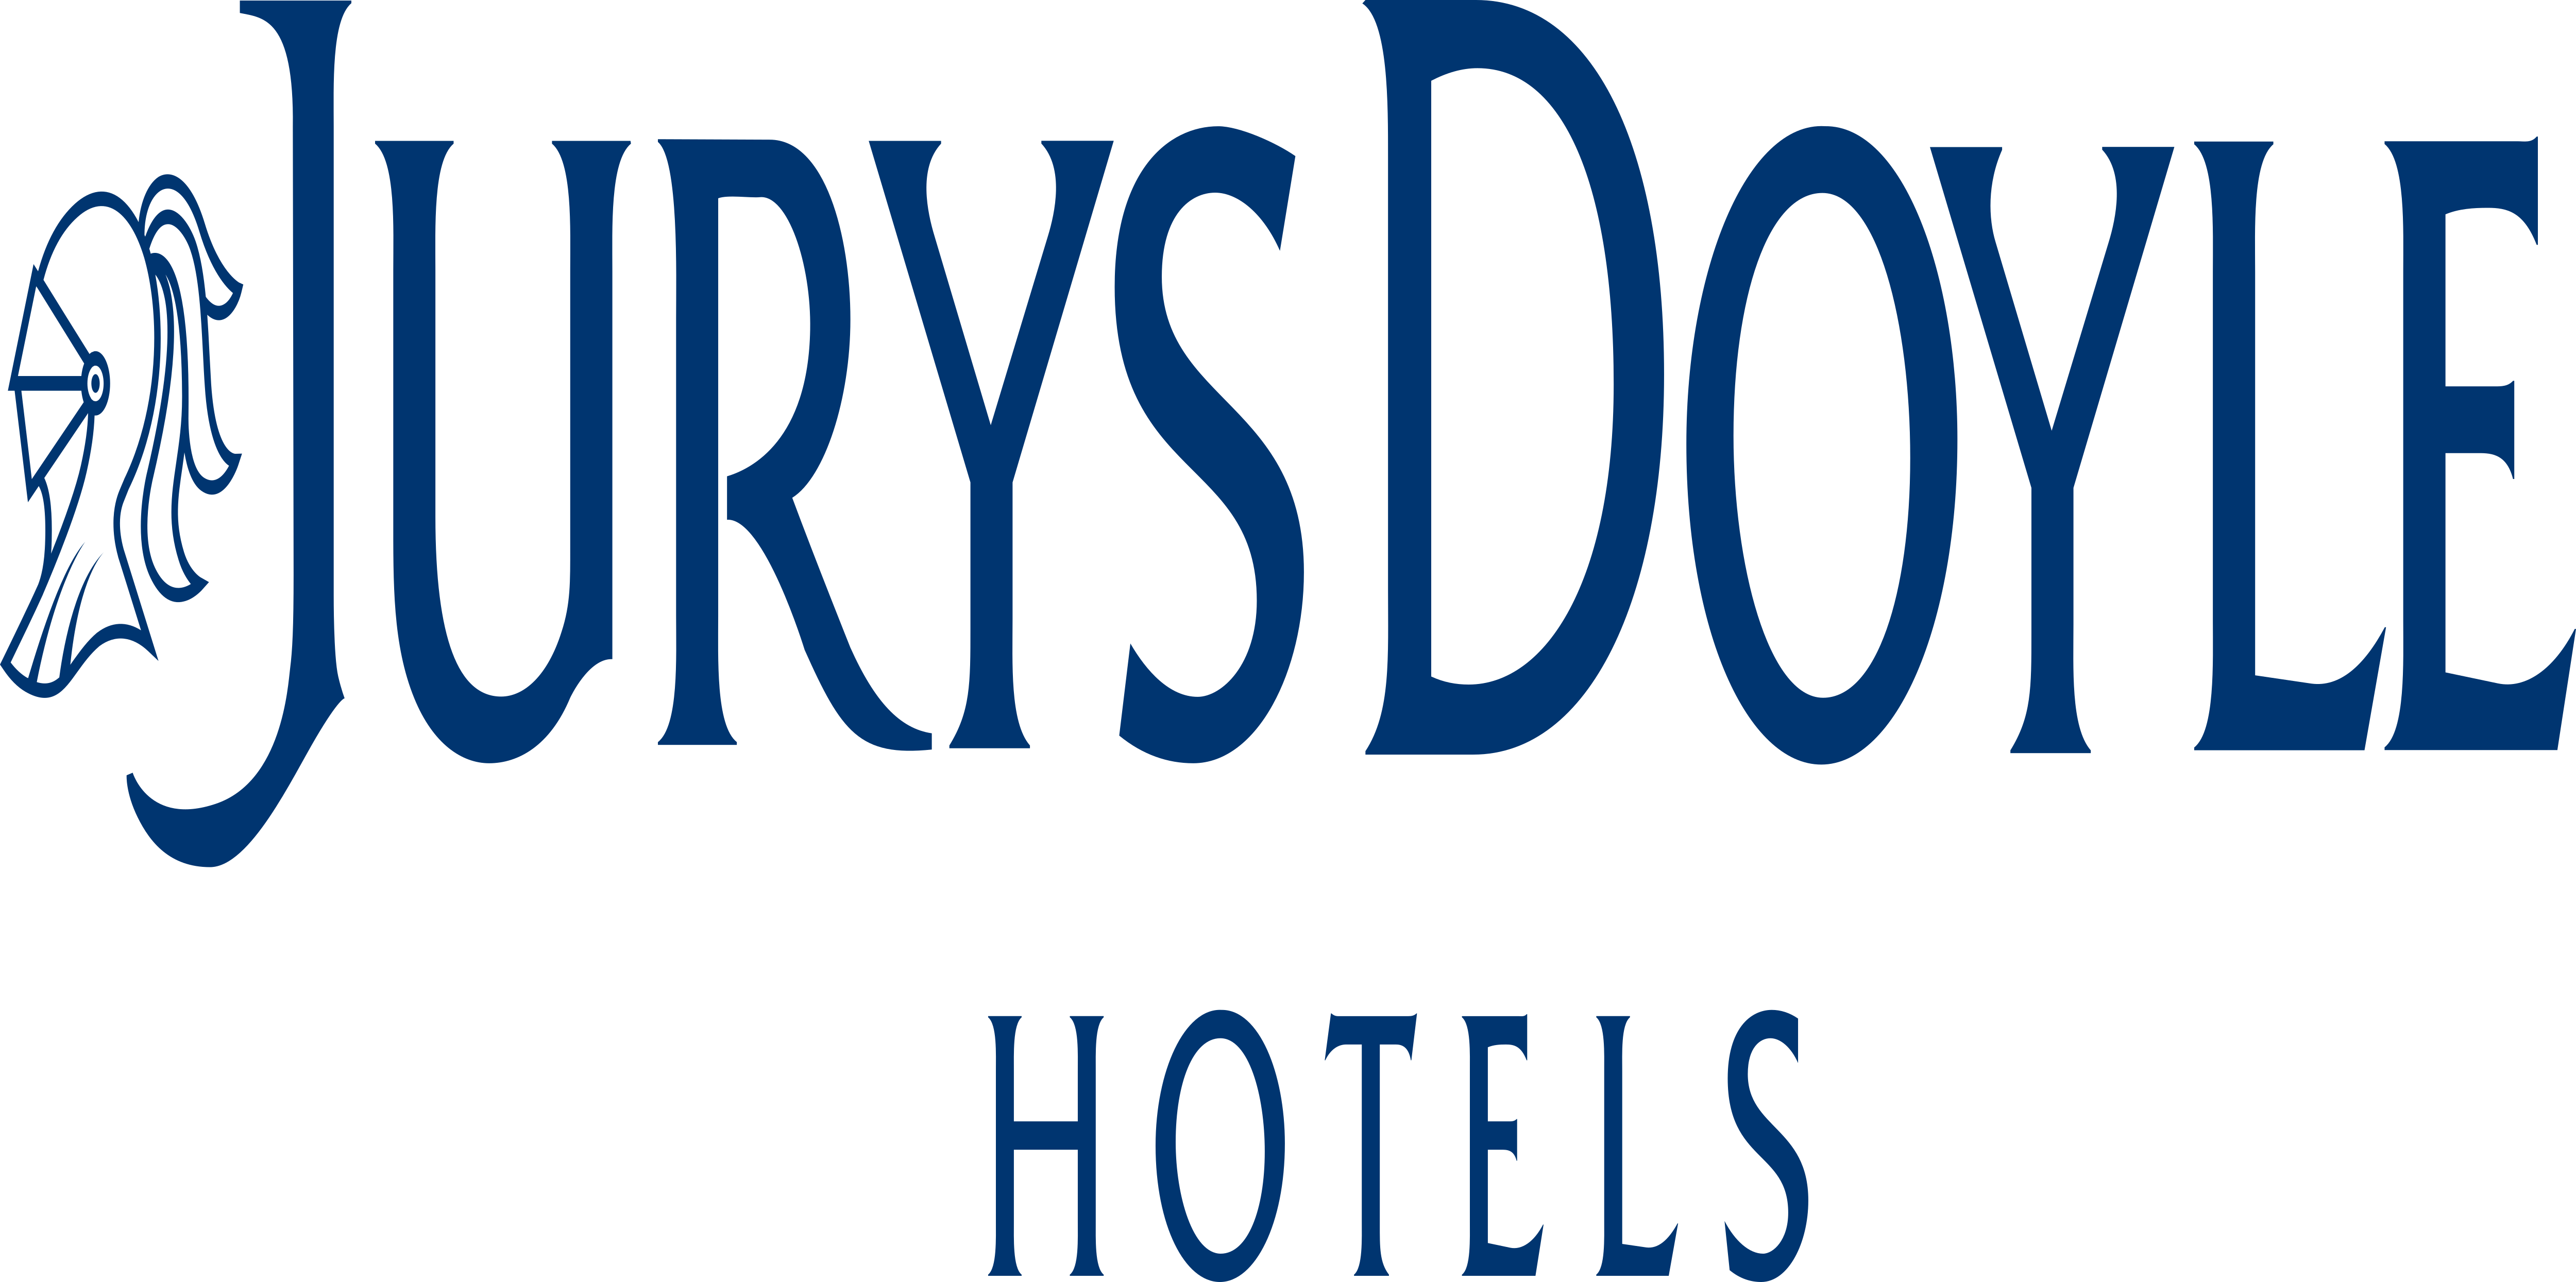  Jurys  Doyle Hotels  Logos  Download